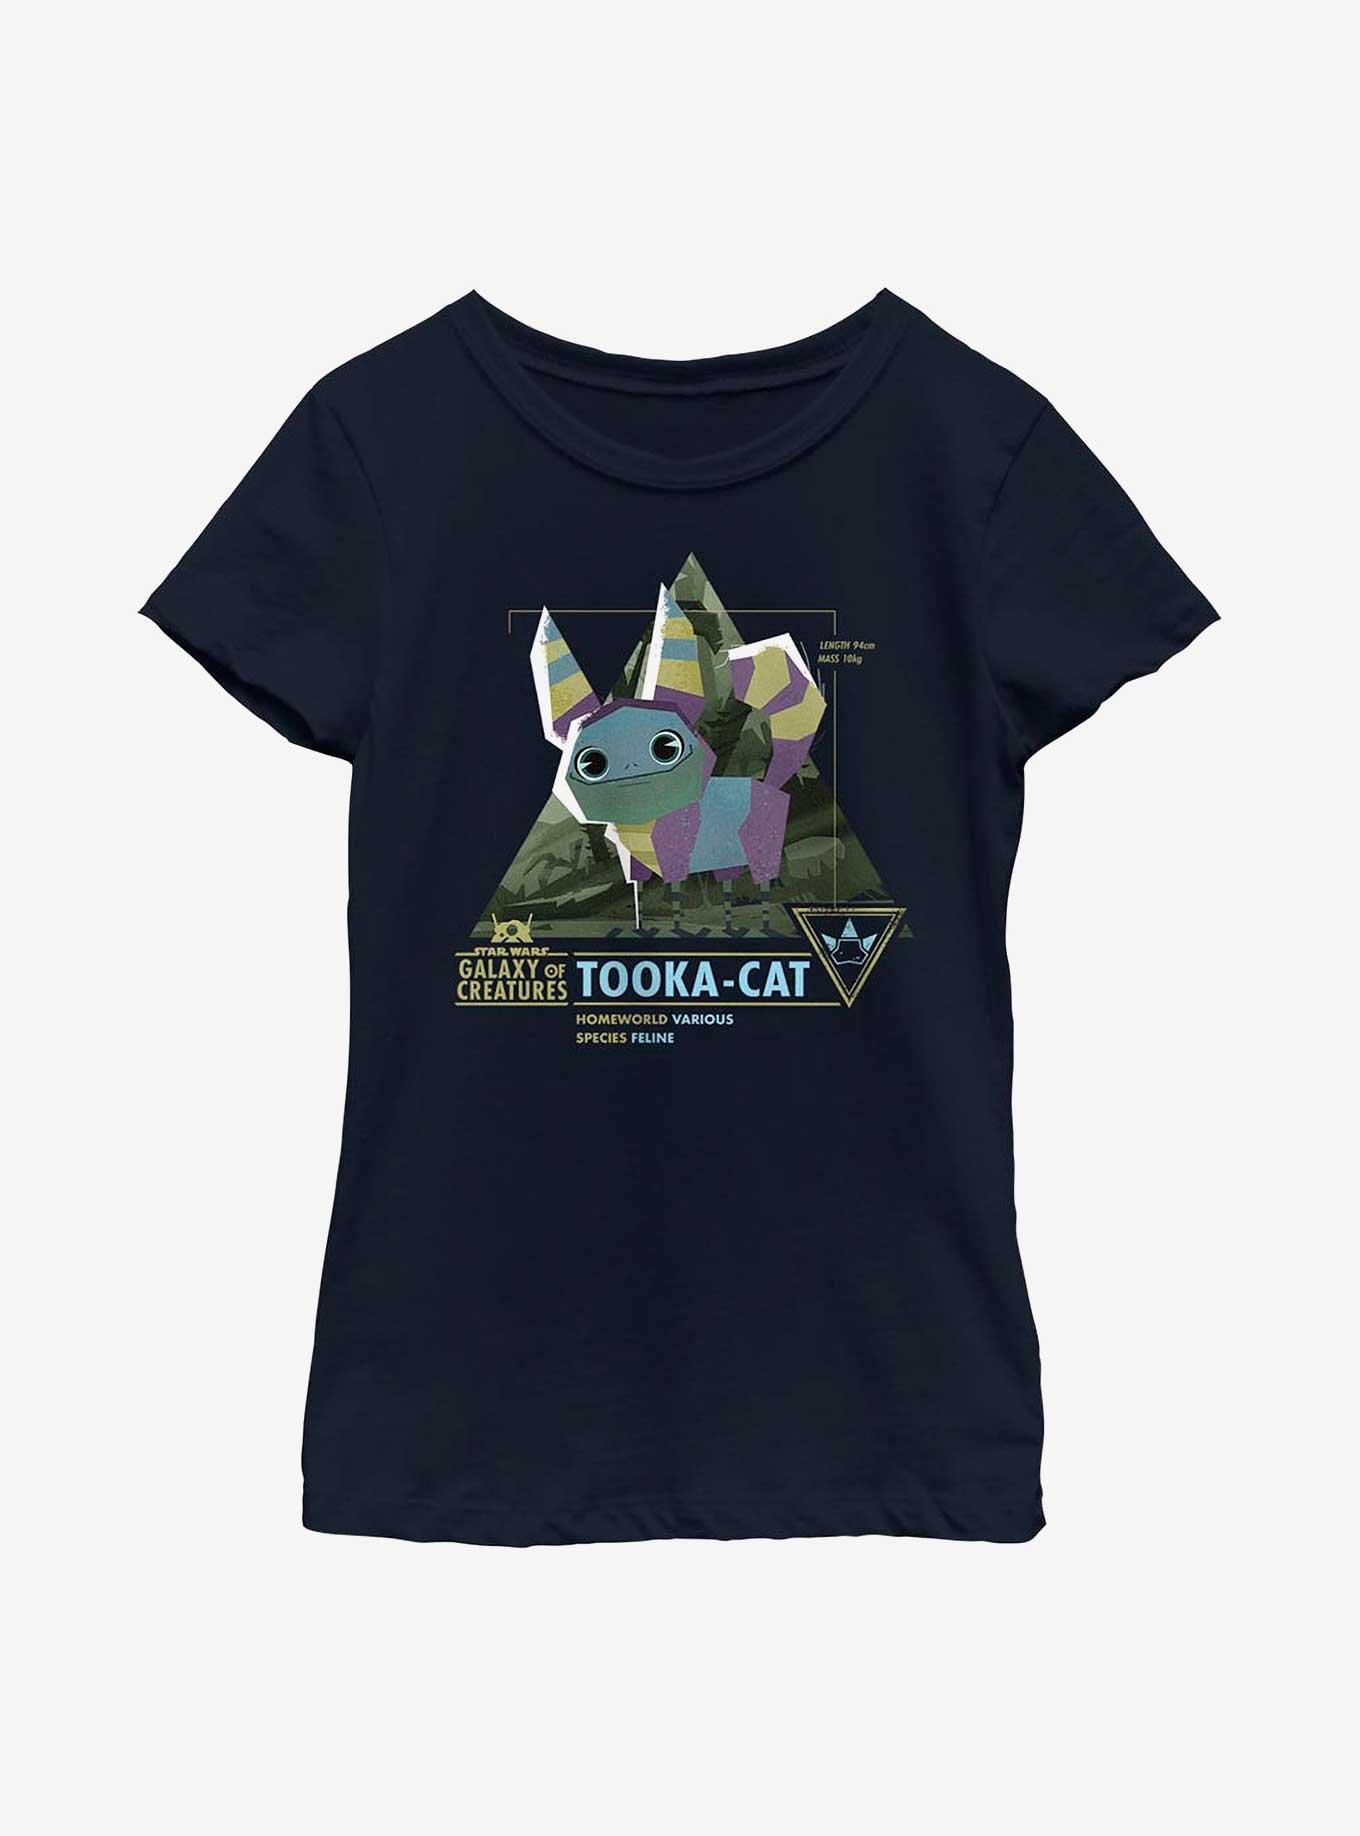 Star Wars Galaxy Of Creatures Tooka-Cat Species Youth Girls T-Shirt, NAVY, hi-res